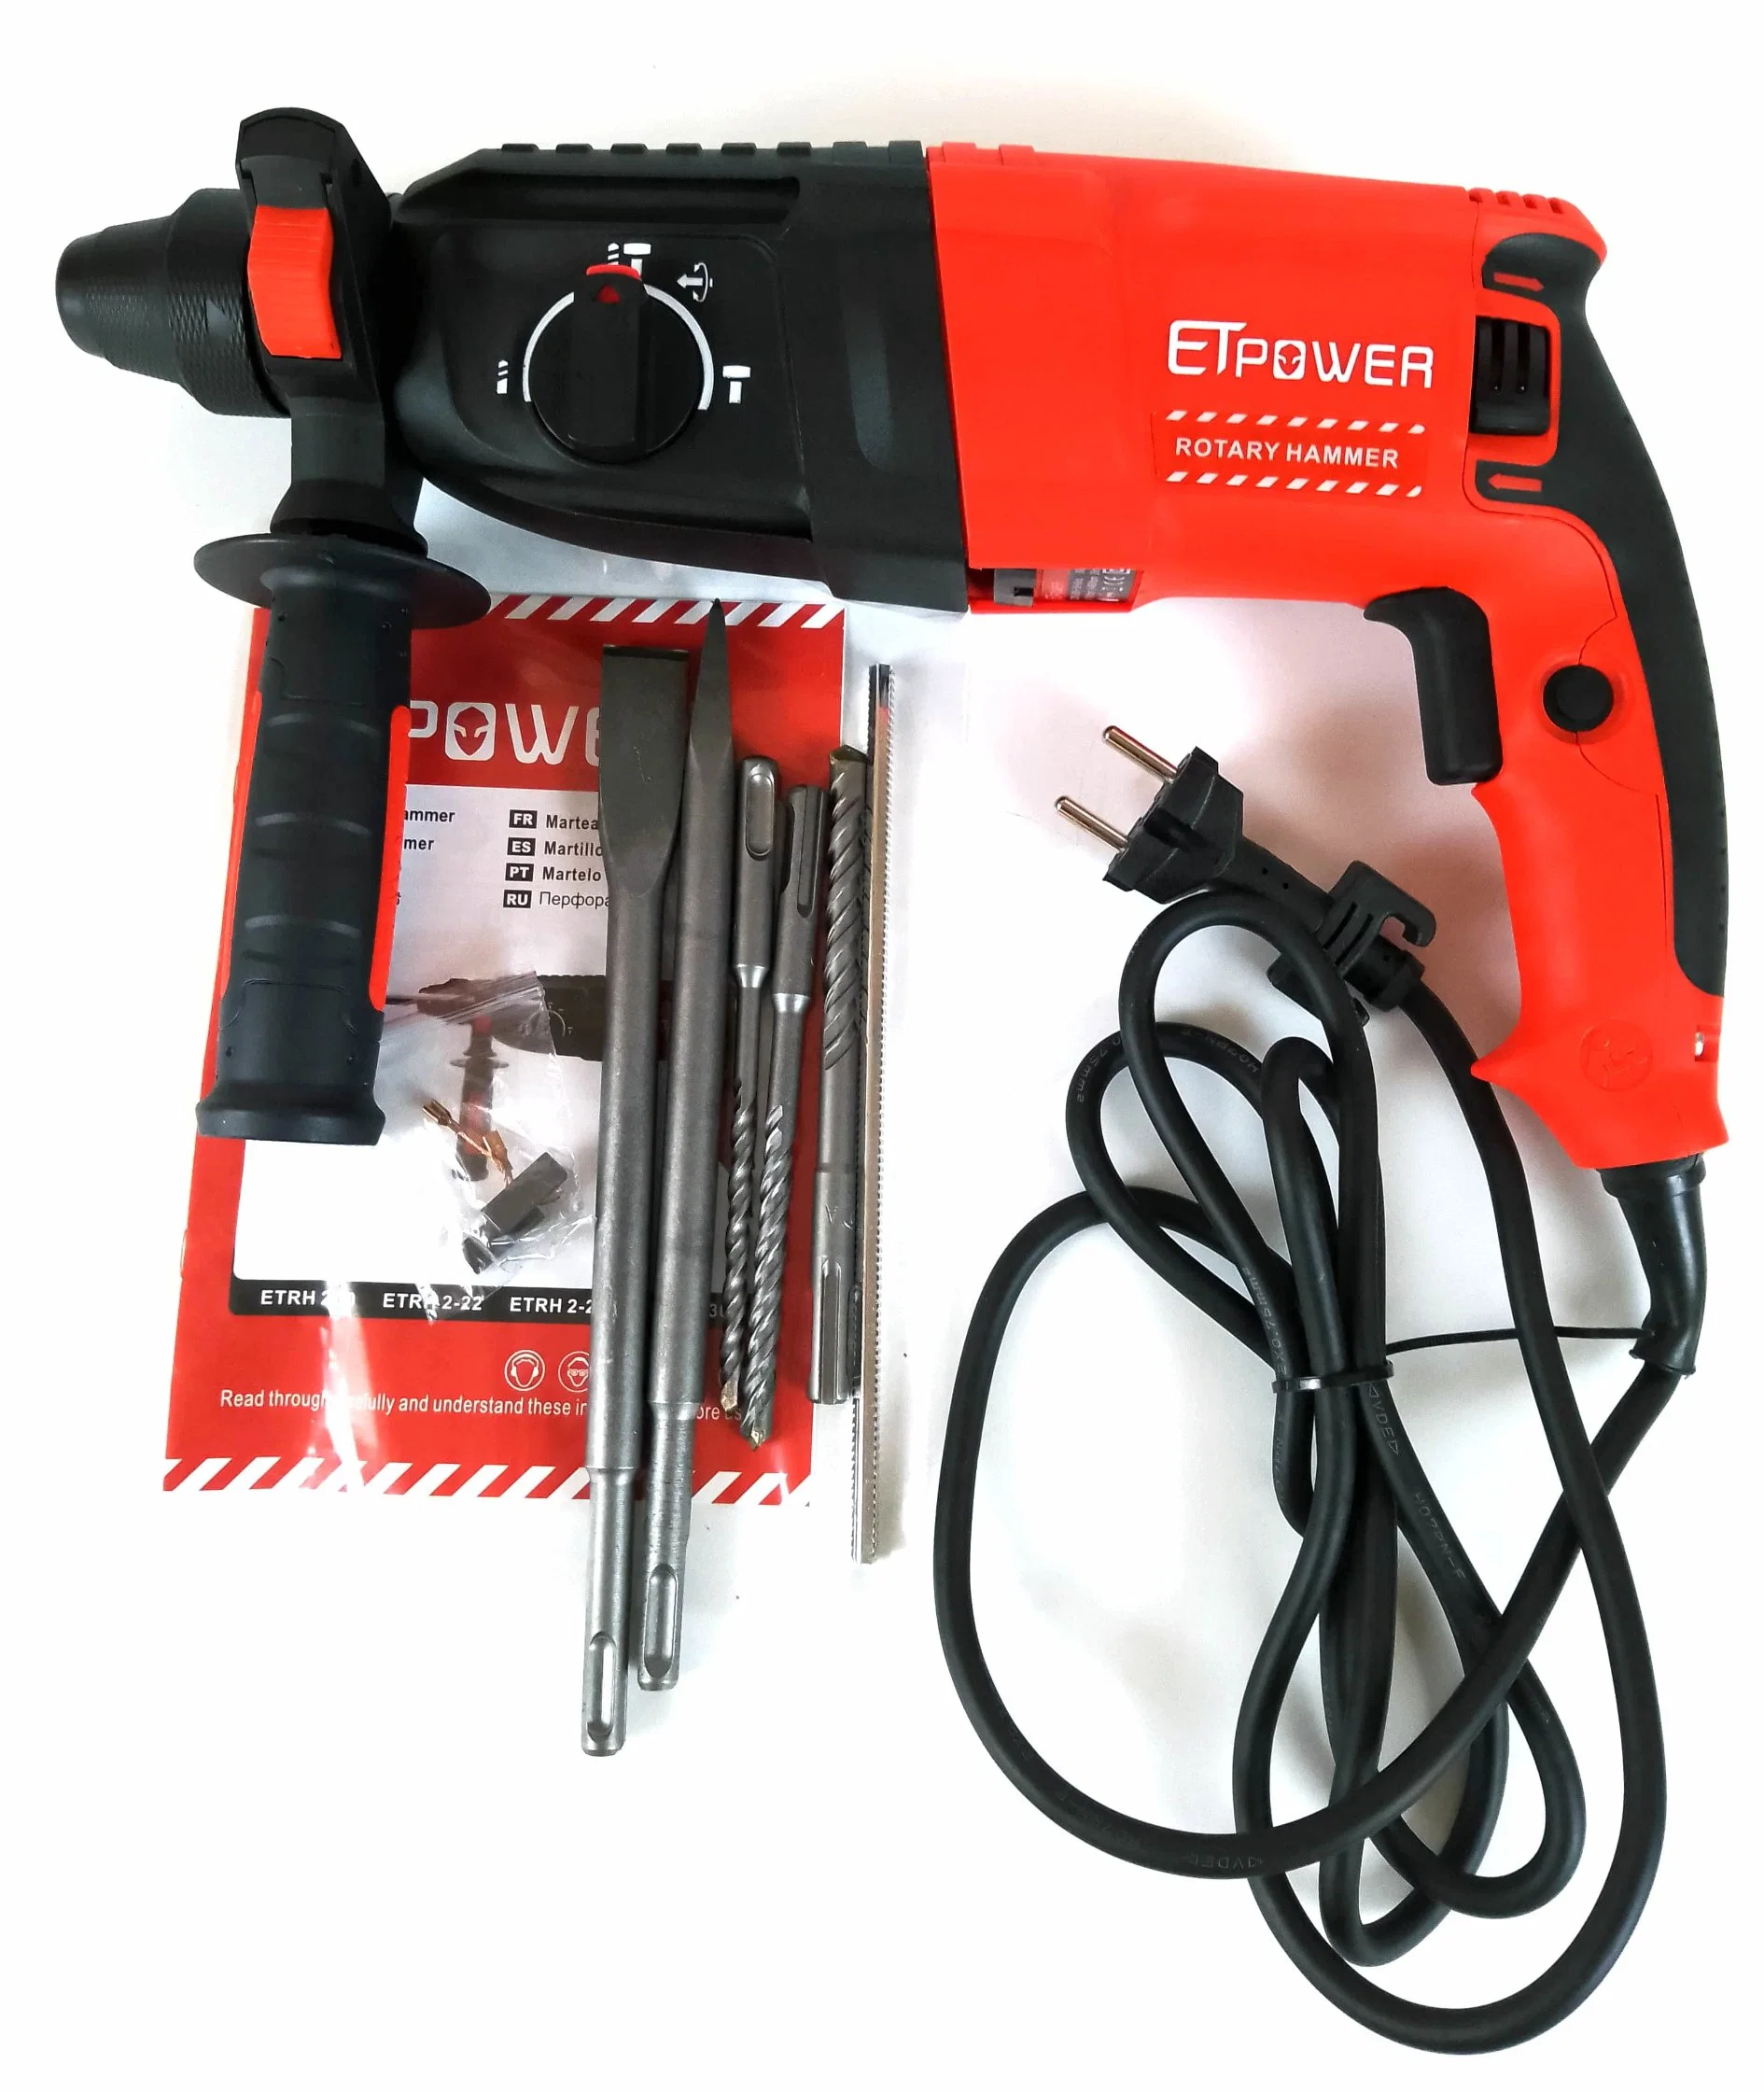 Etpower Power Tools Electric Rotary Demolition Drill Machine Hammer